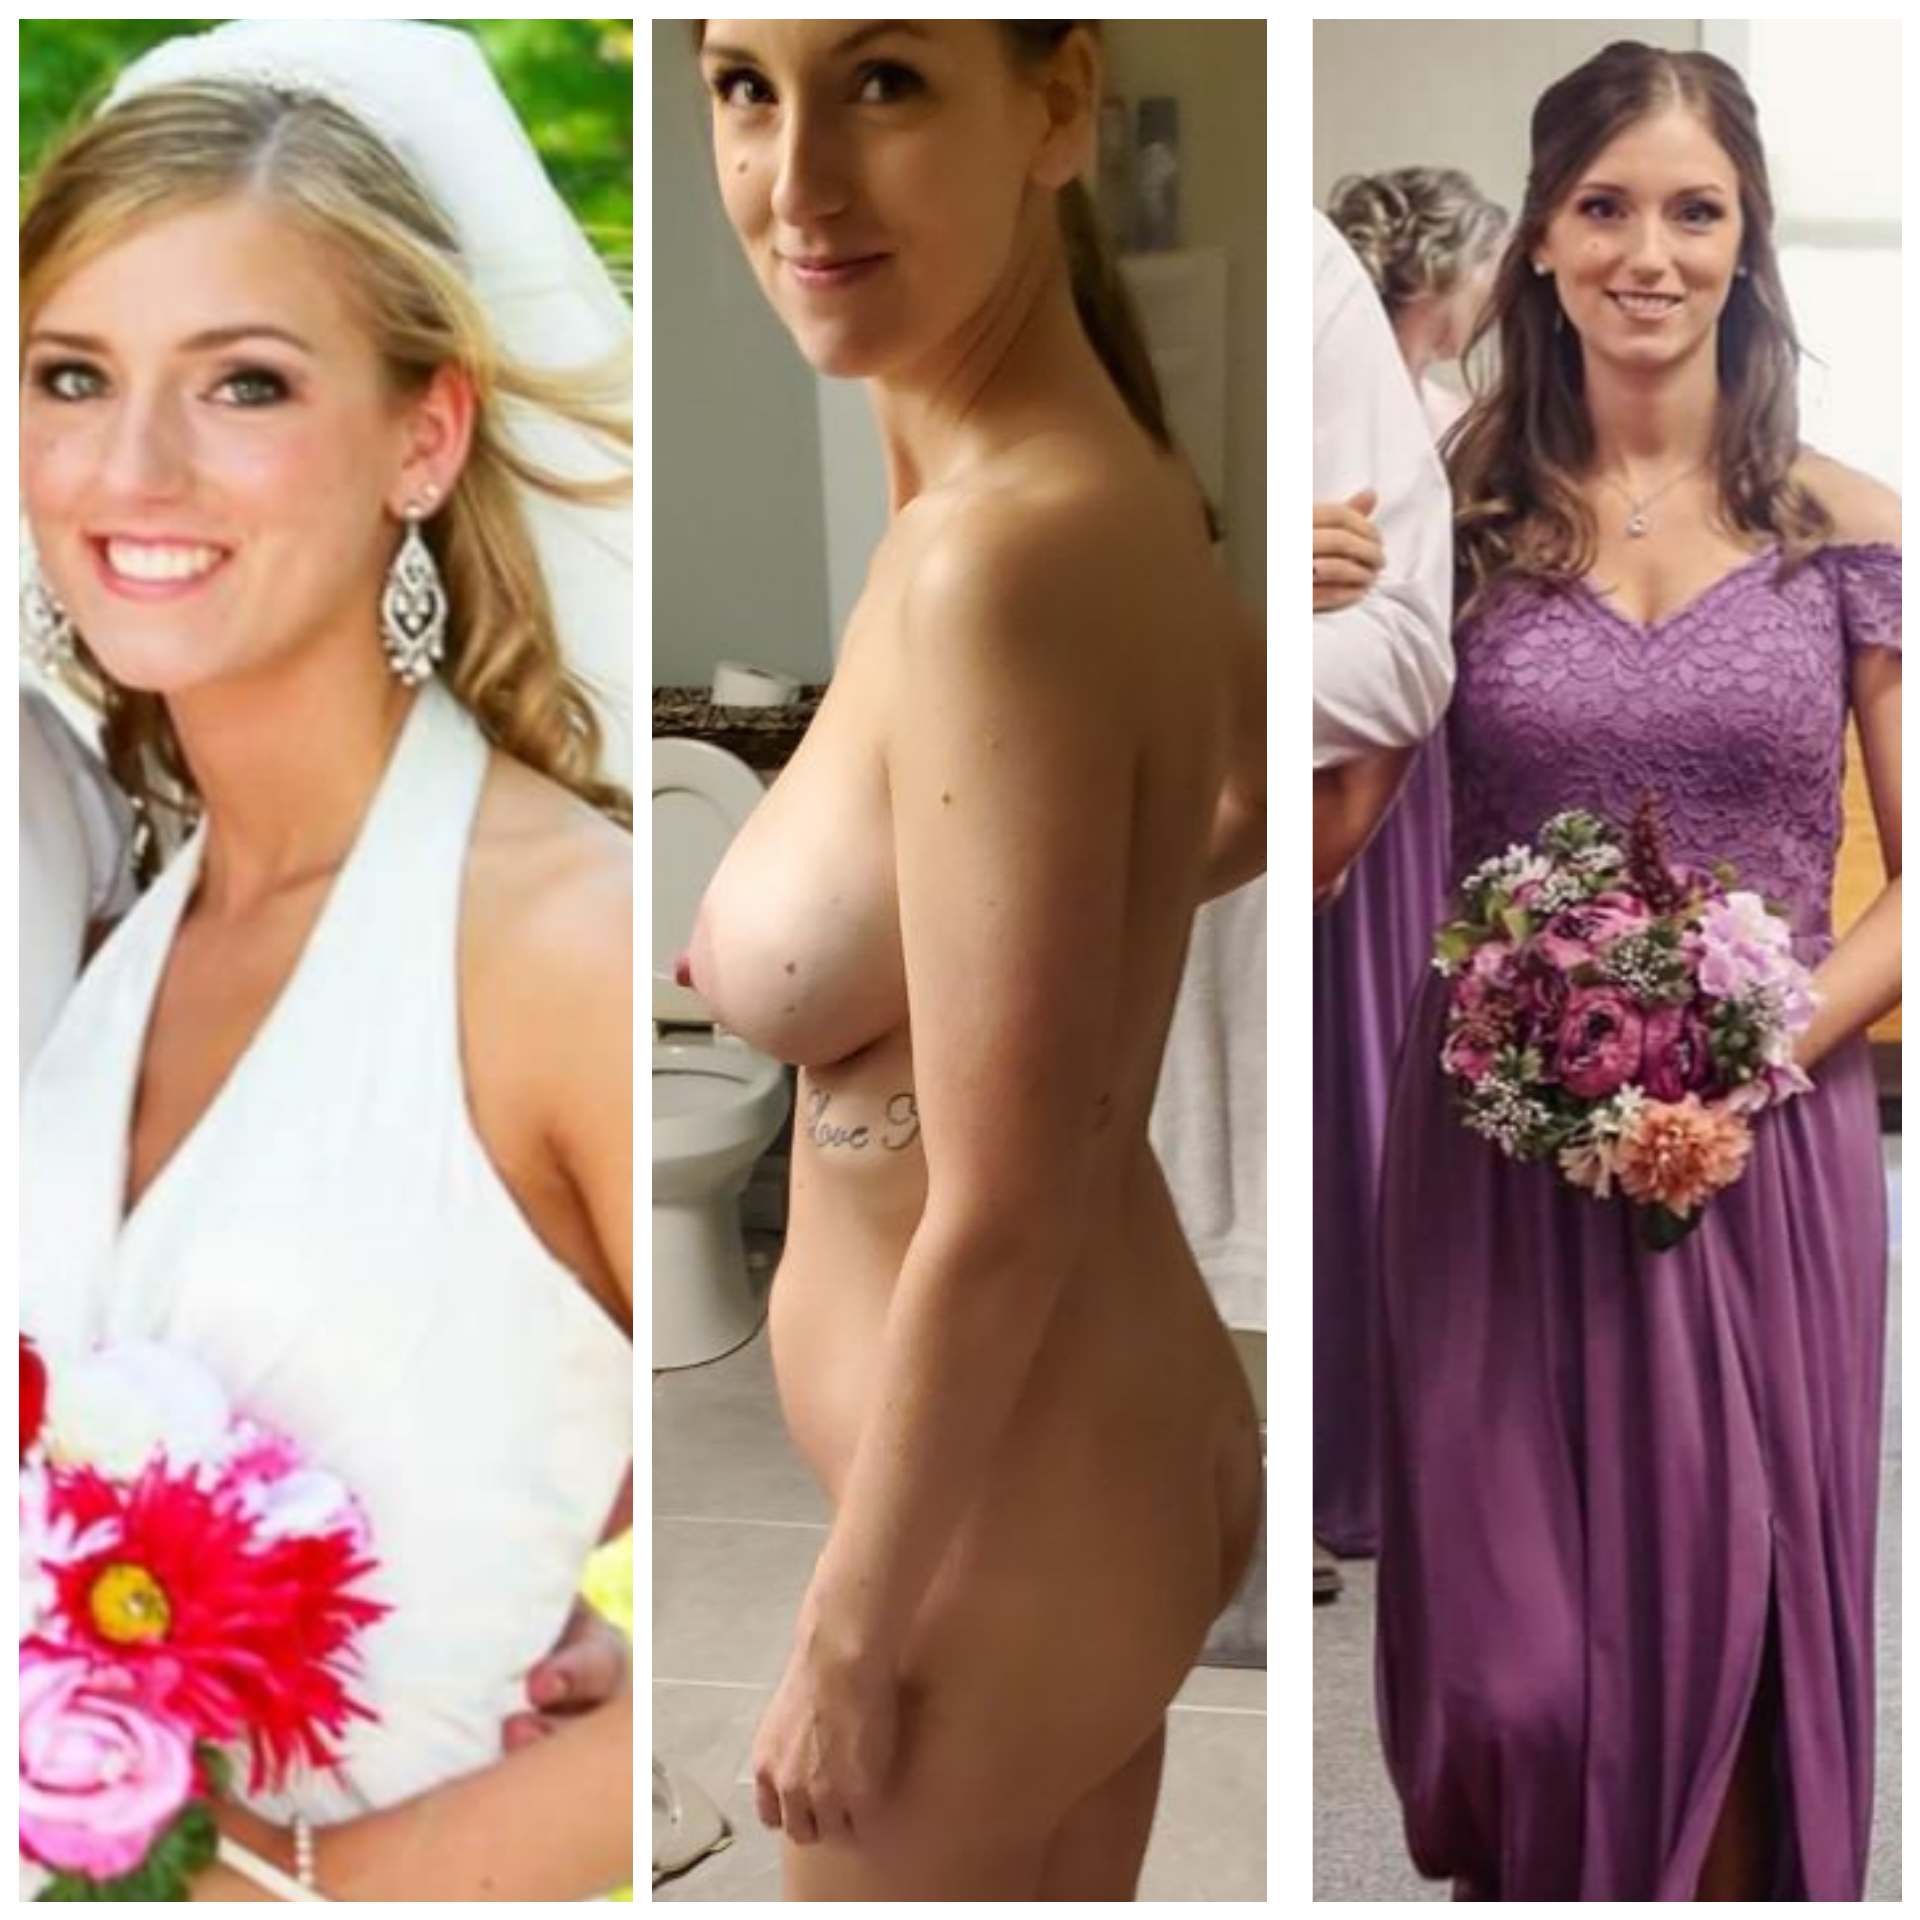 Bridal lingerie gone wild: the most erotic dressedundressed brides